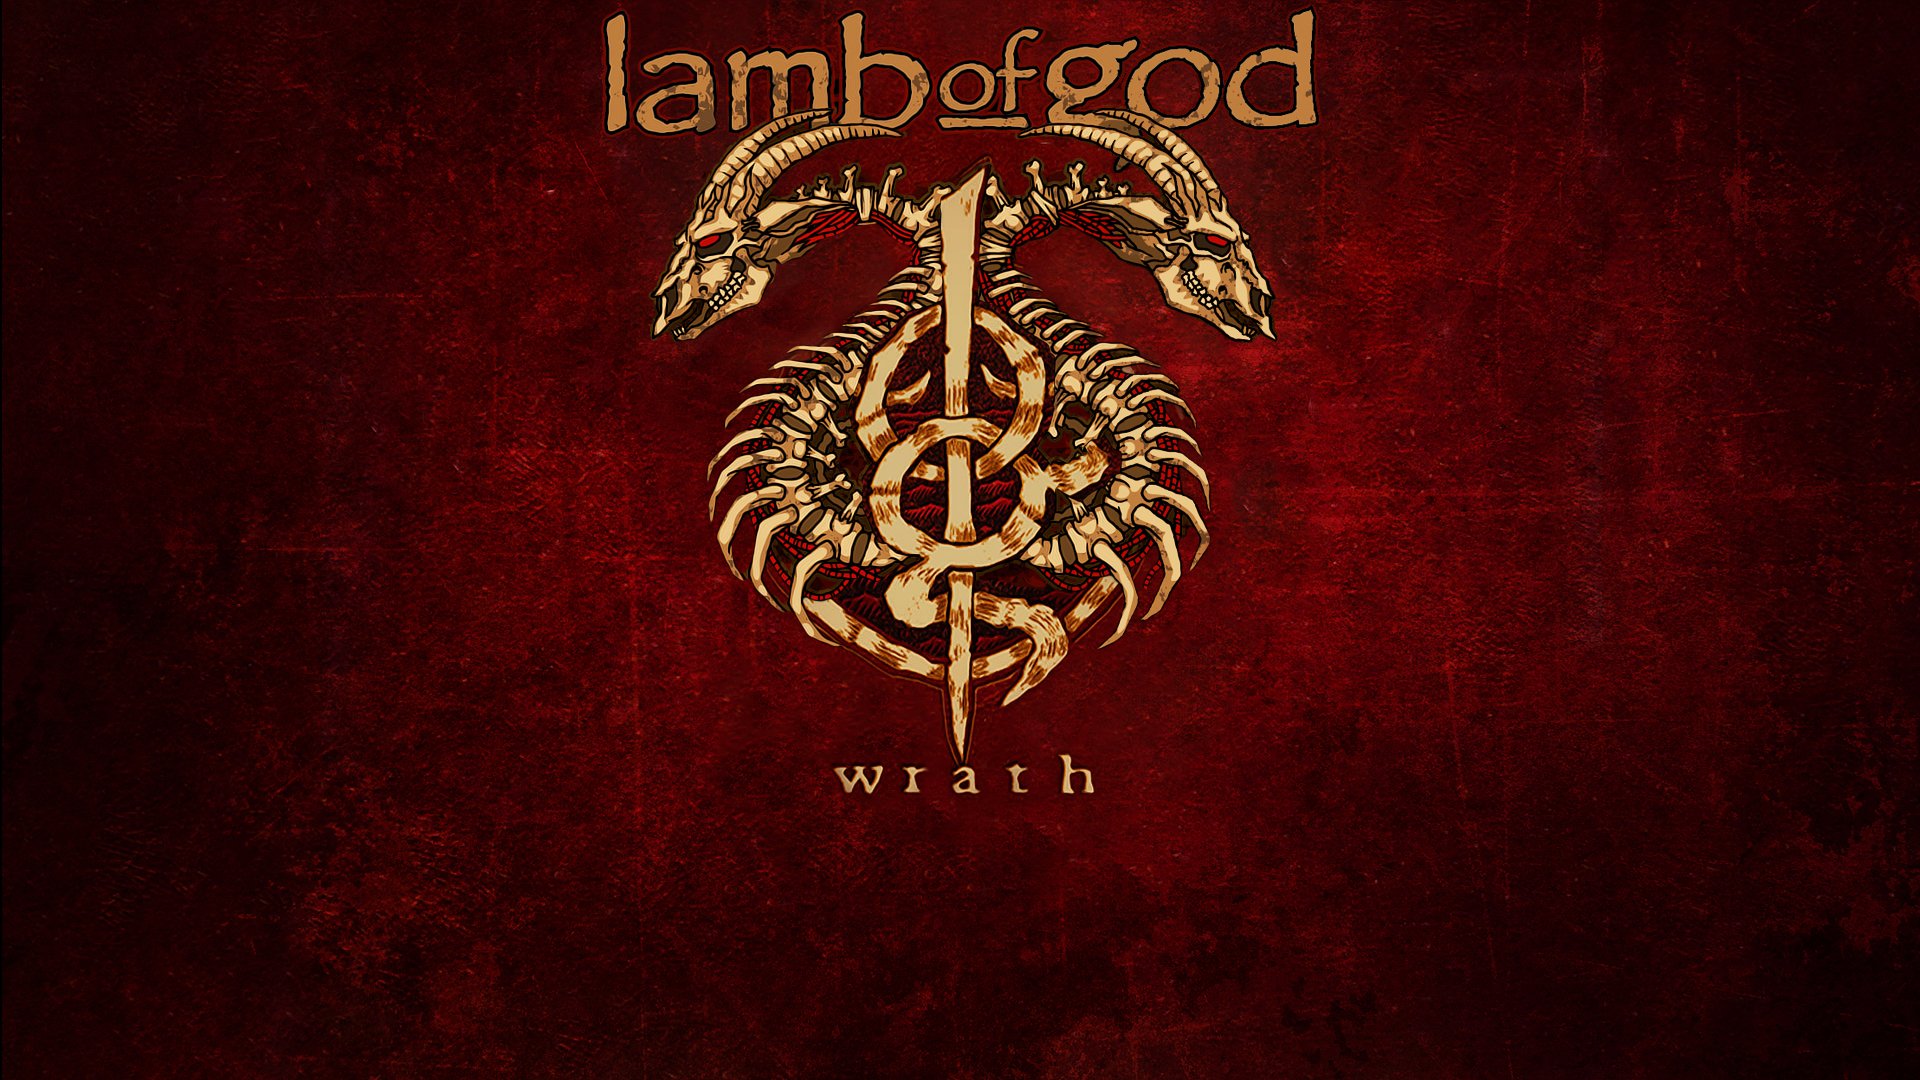 Lamb Of God Backgrounds, Compatible - PC, Mobile, Gadgets| 1920x1080 px